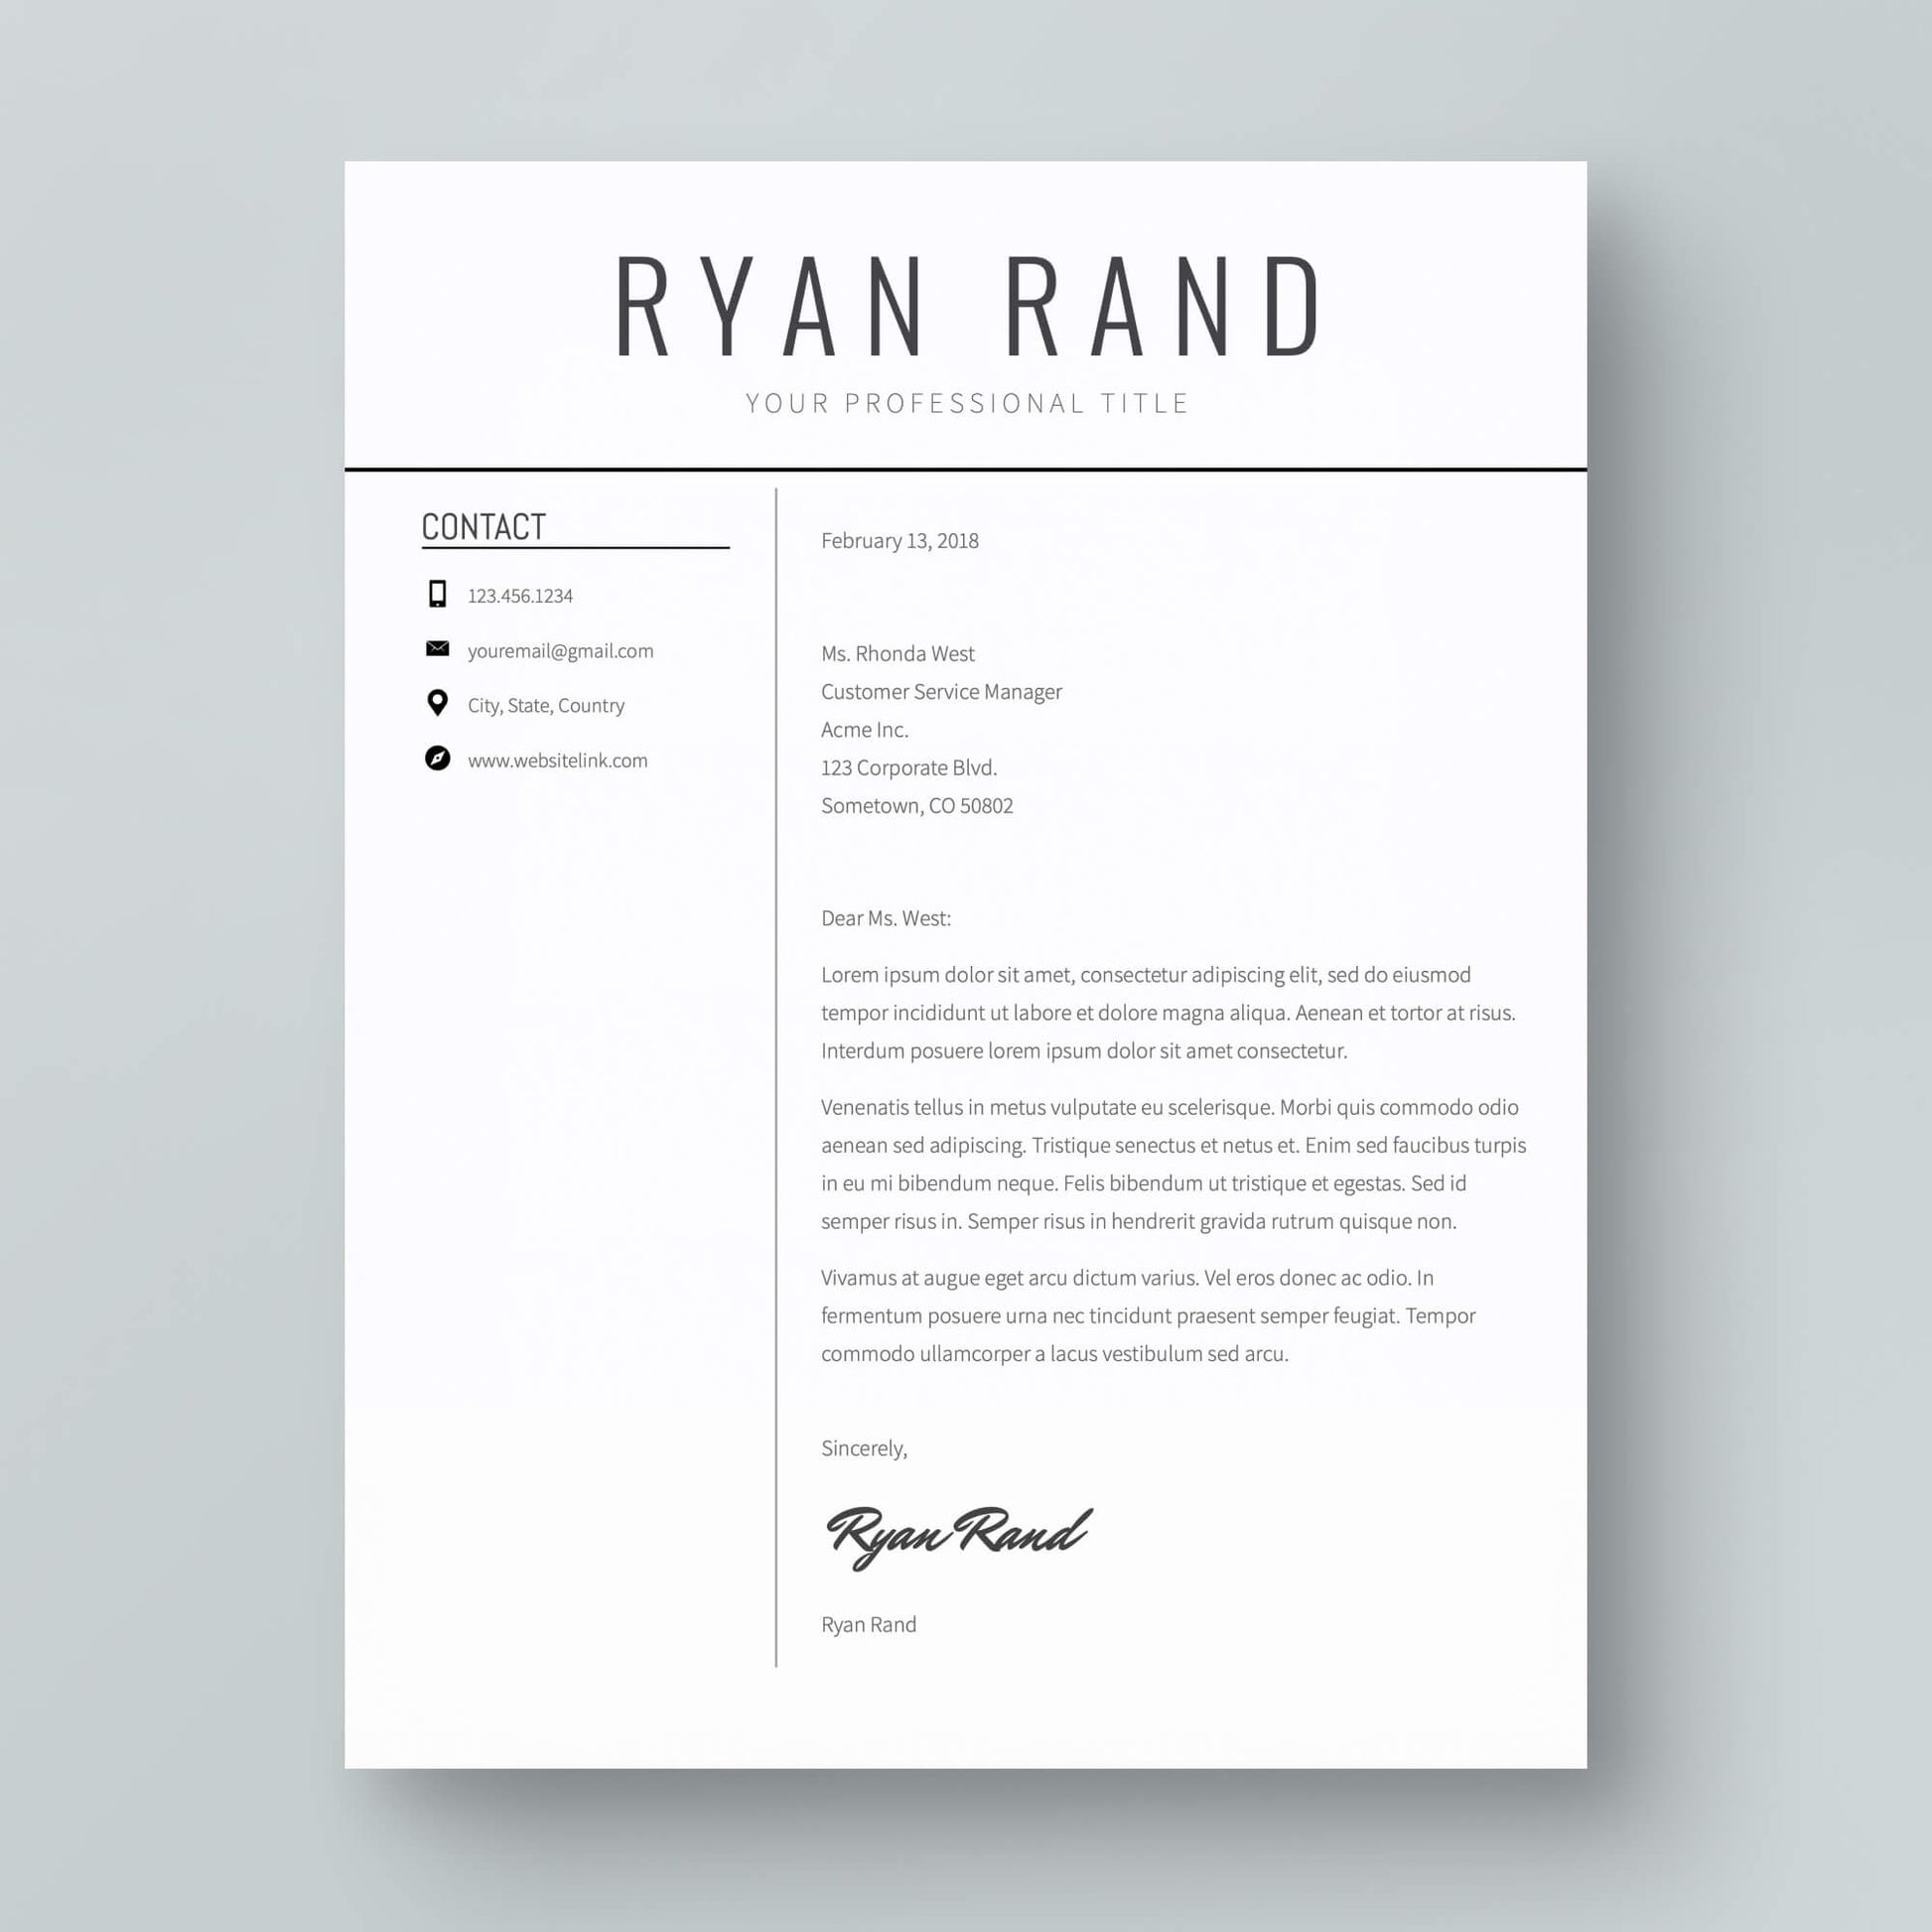 Resume Template: Ryan Rand - MioDocs